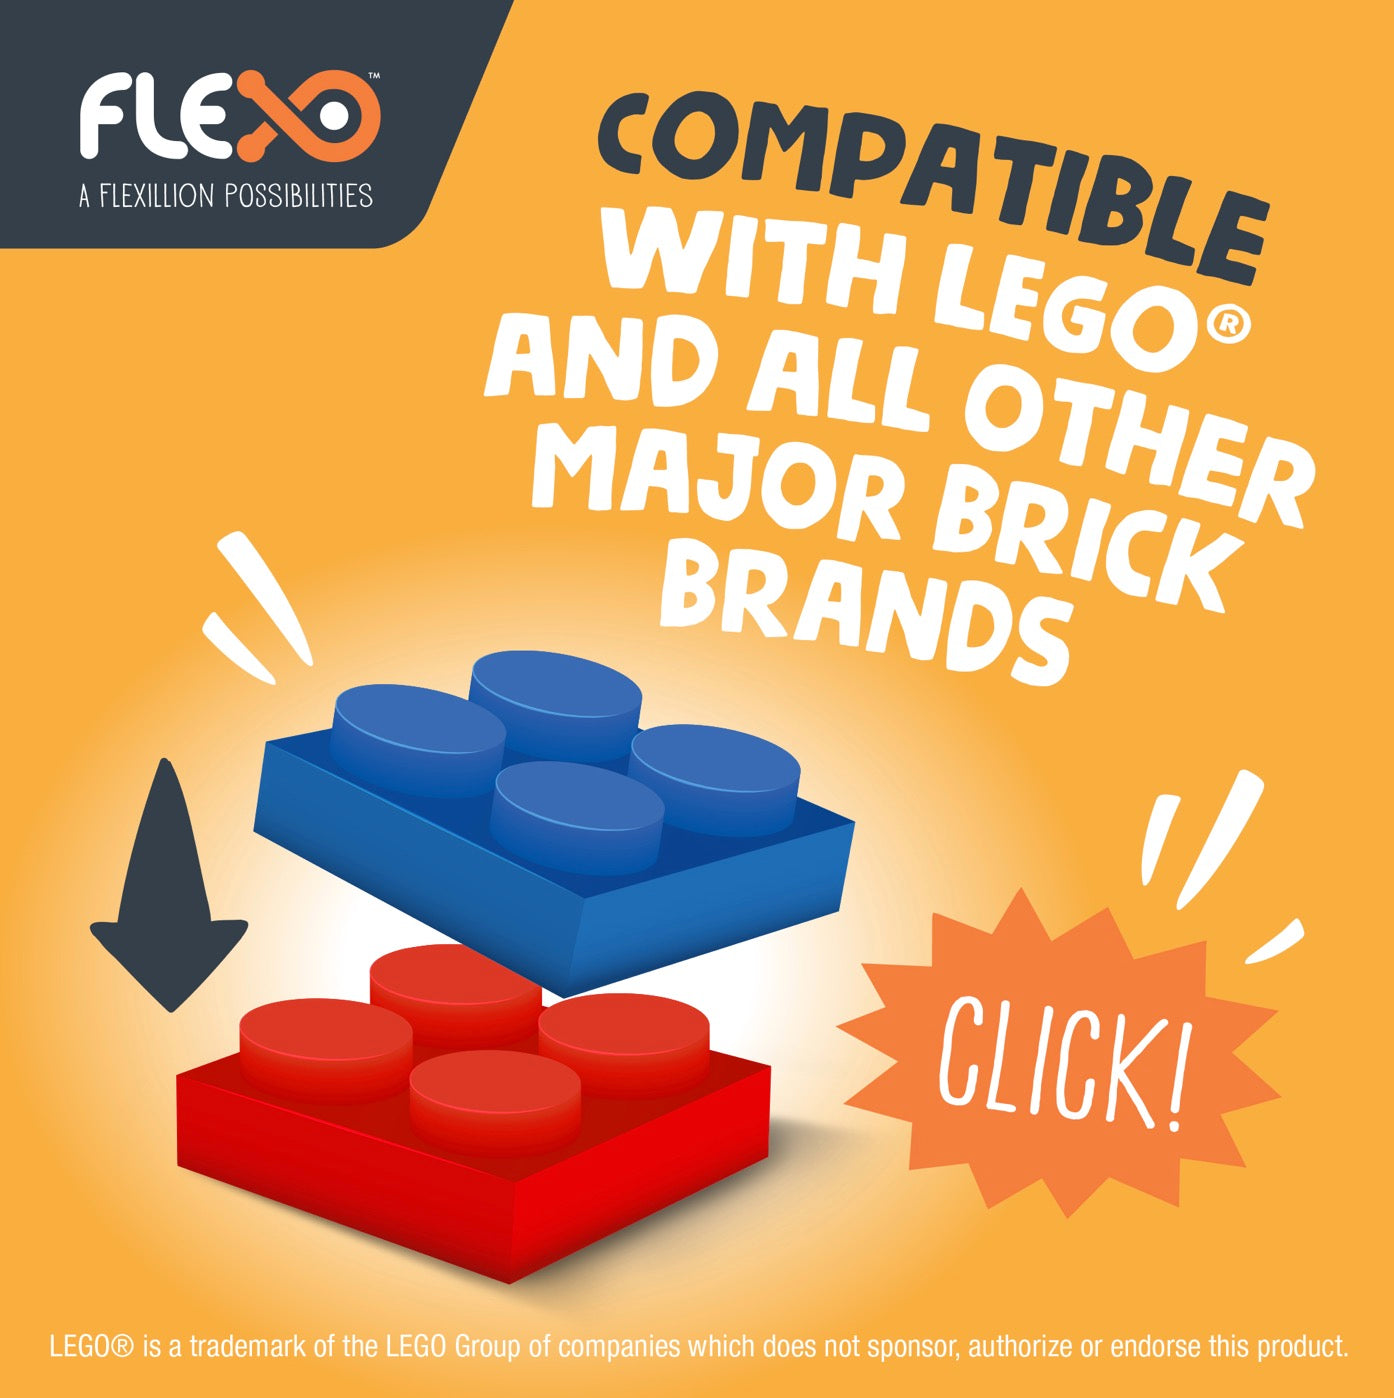 Flexo Flexible Brick System Stingray